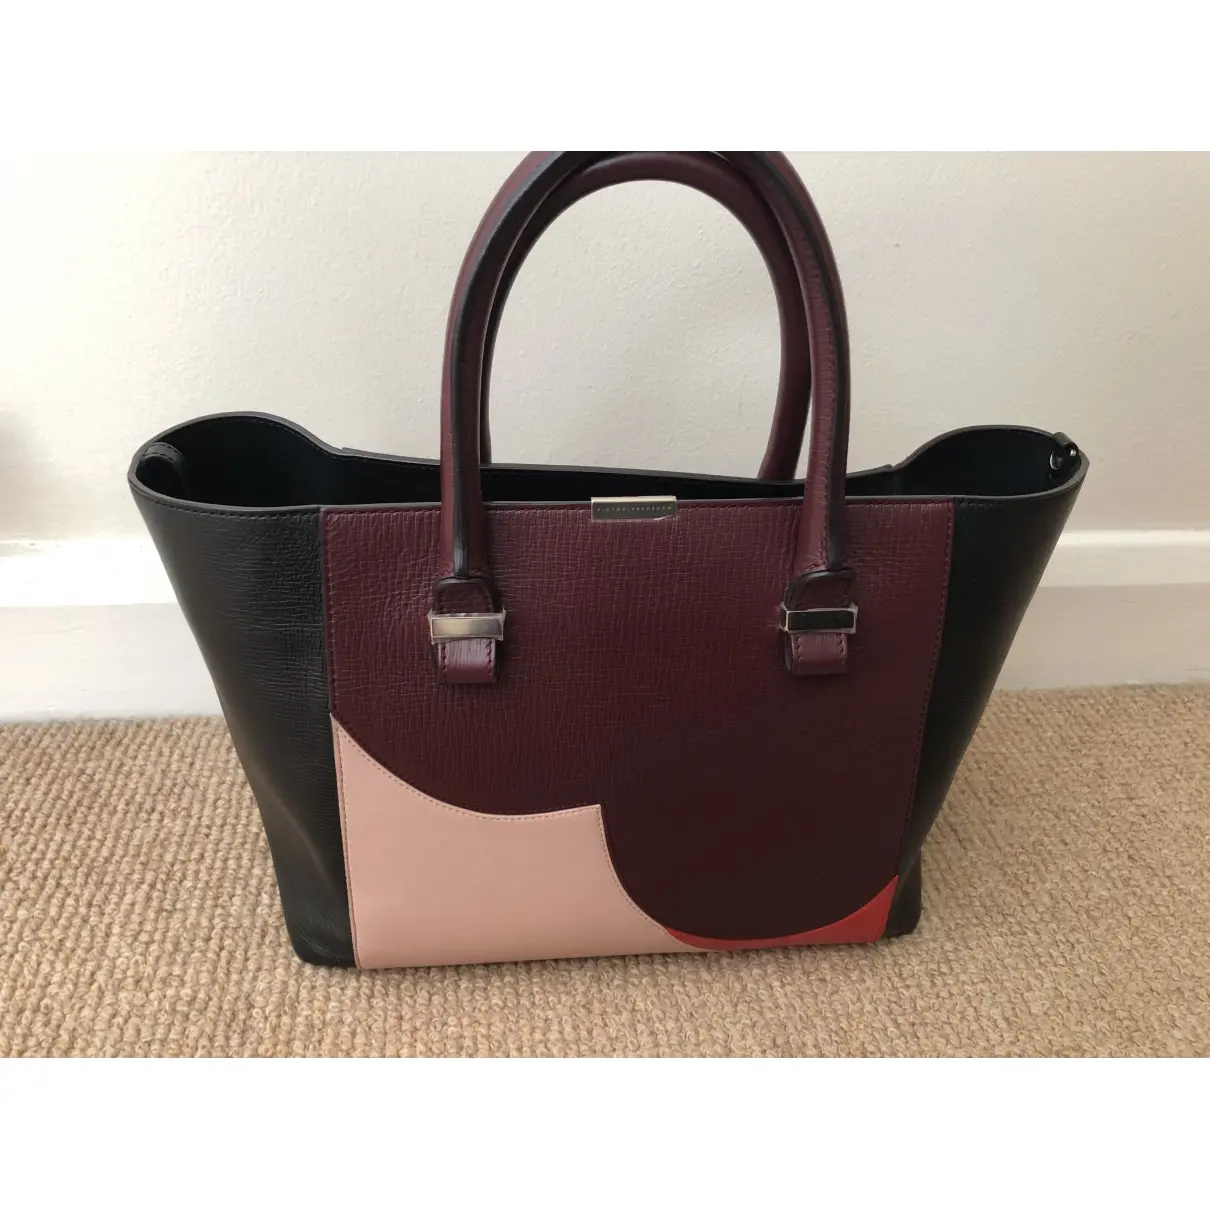 Victoria Beckham Quincy leather handbag for sale